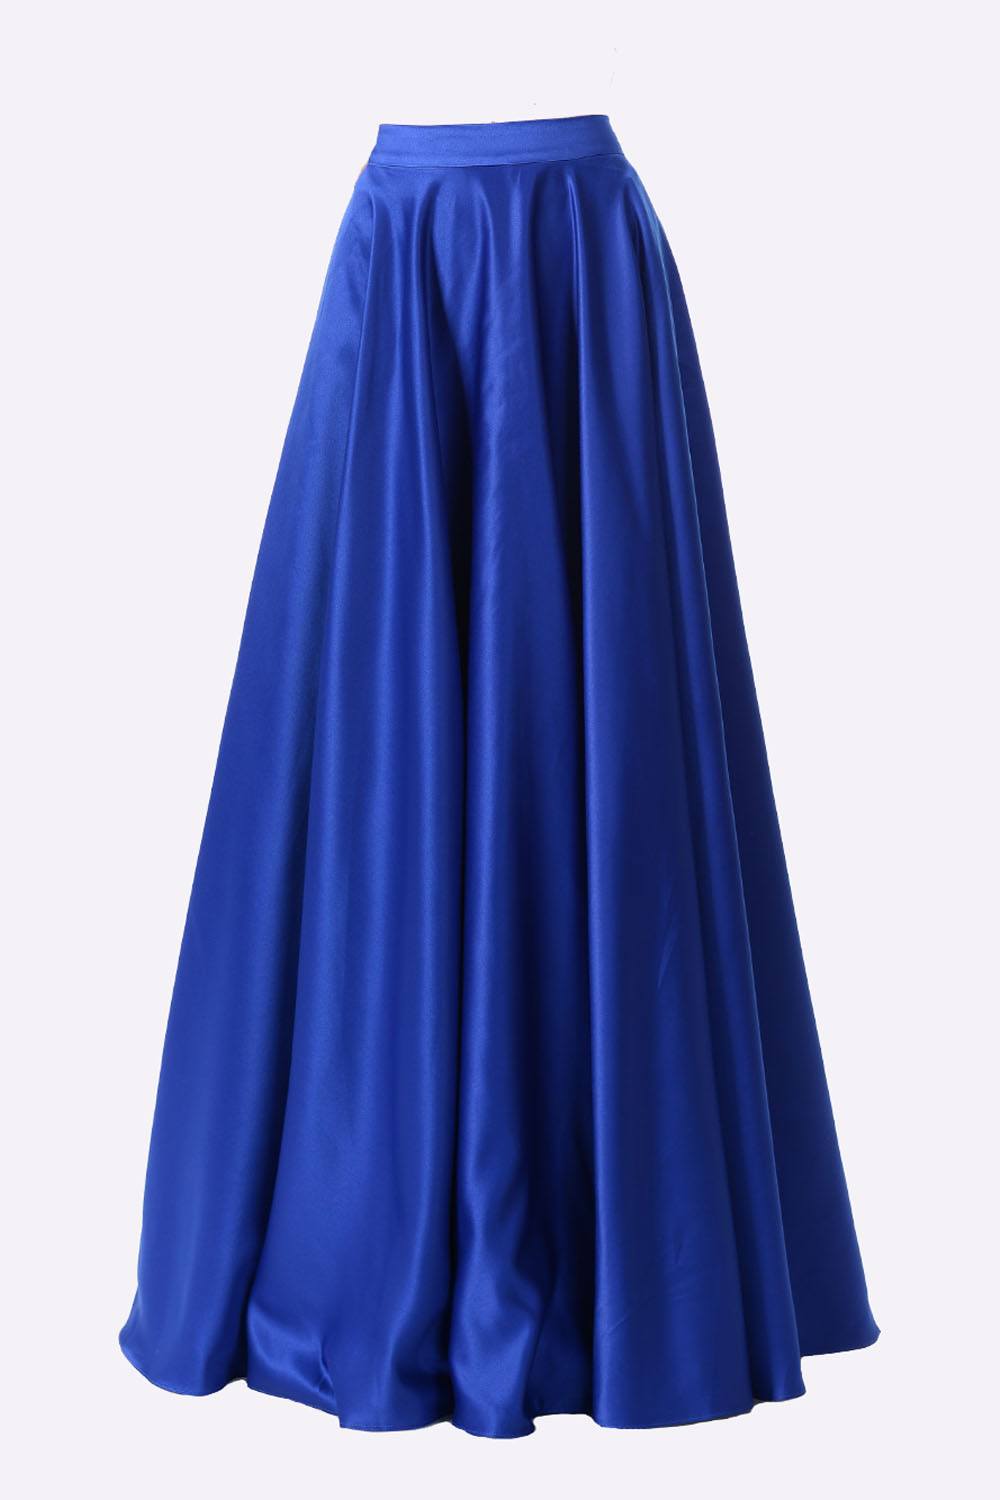 Poly USA SK10 - Long Royal Blue Satin Skirt Side Pockets